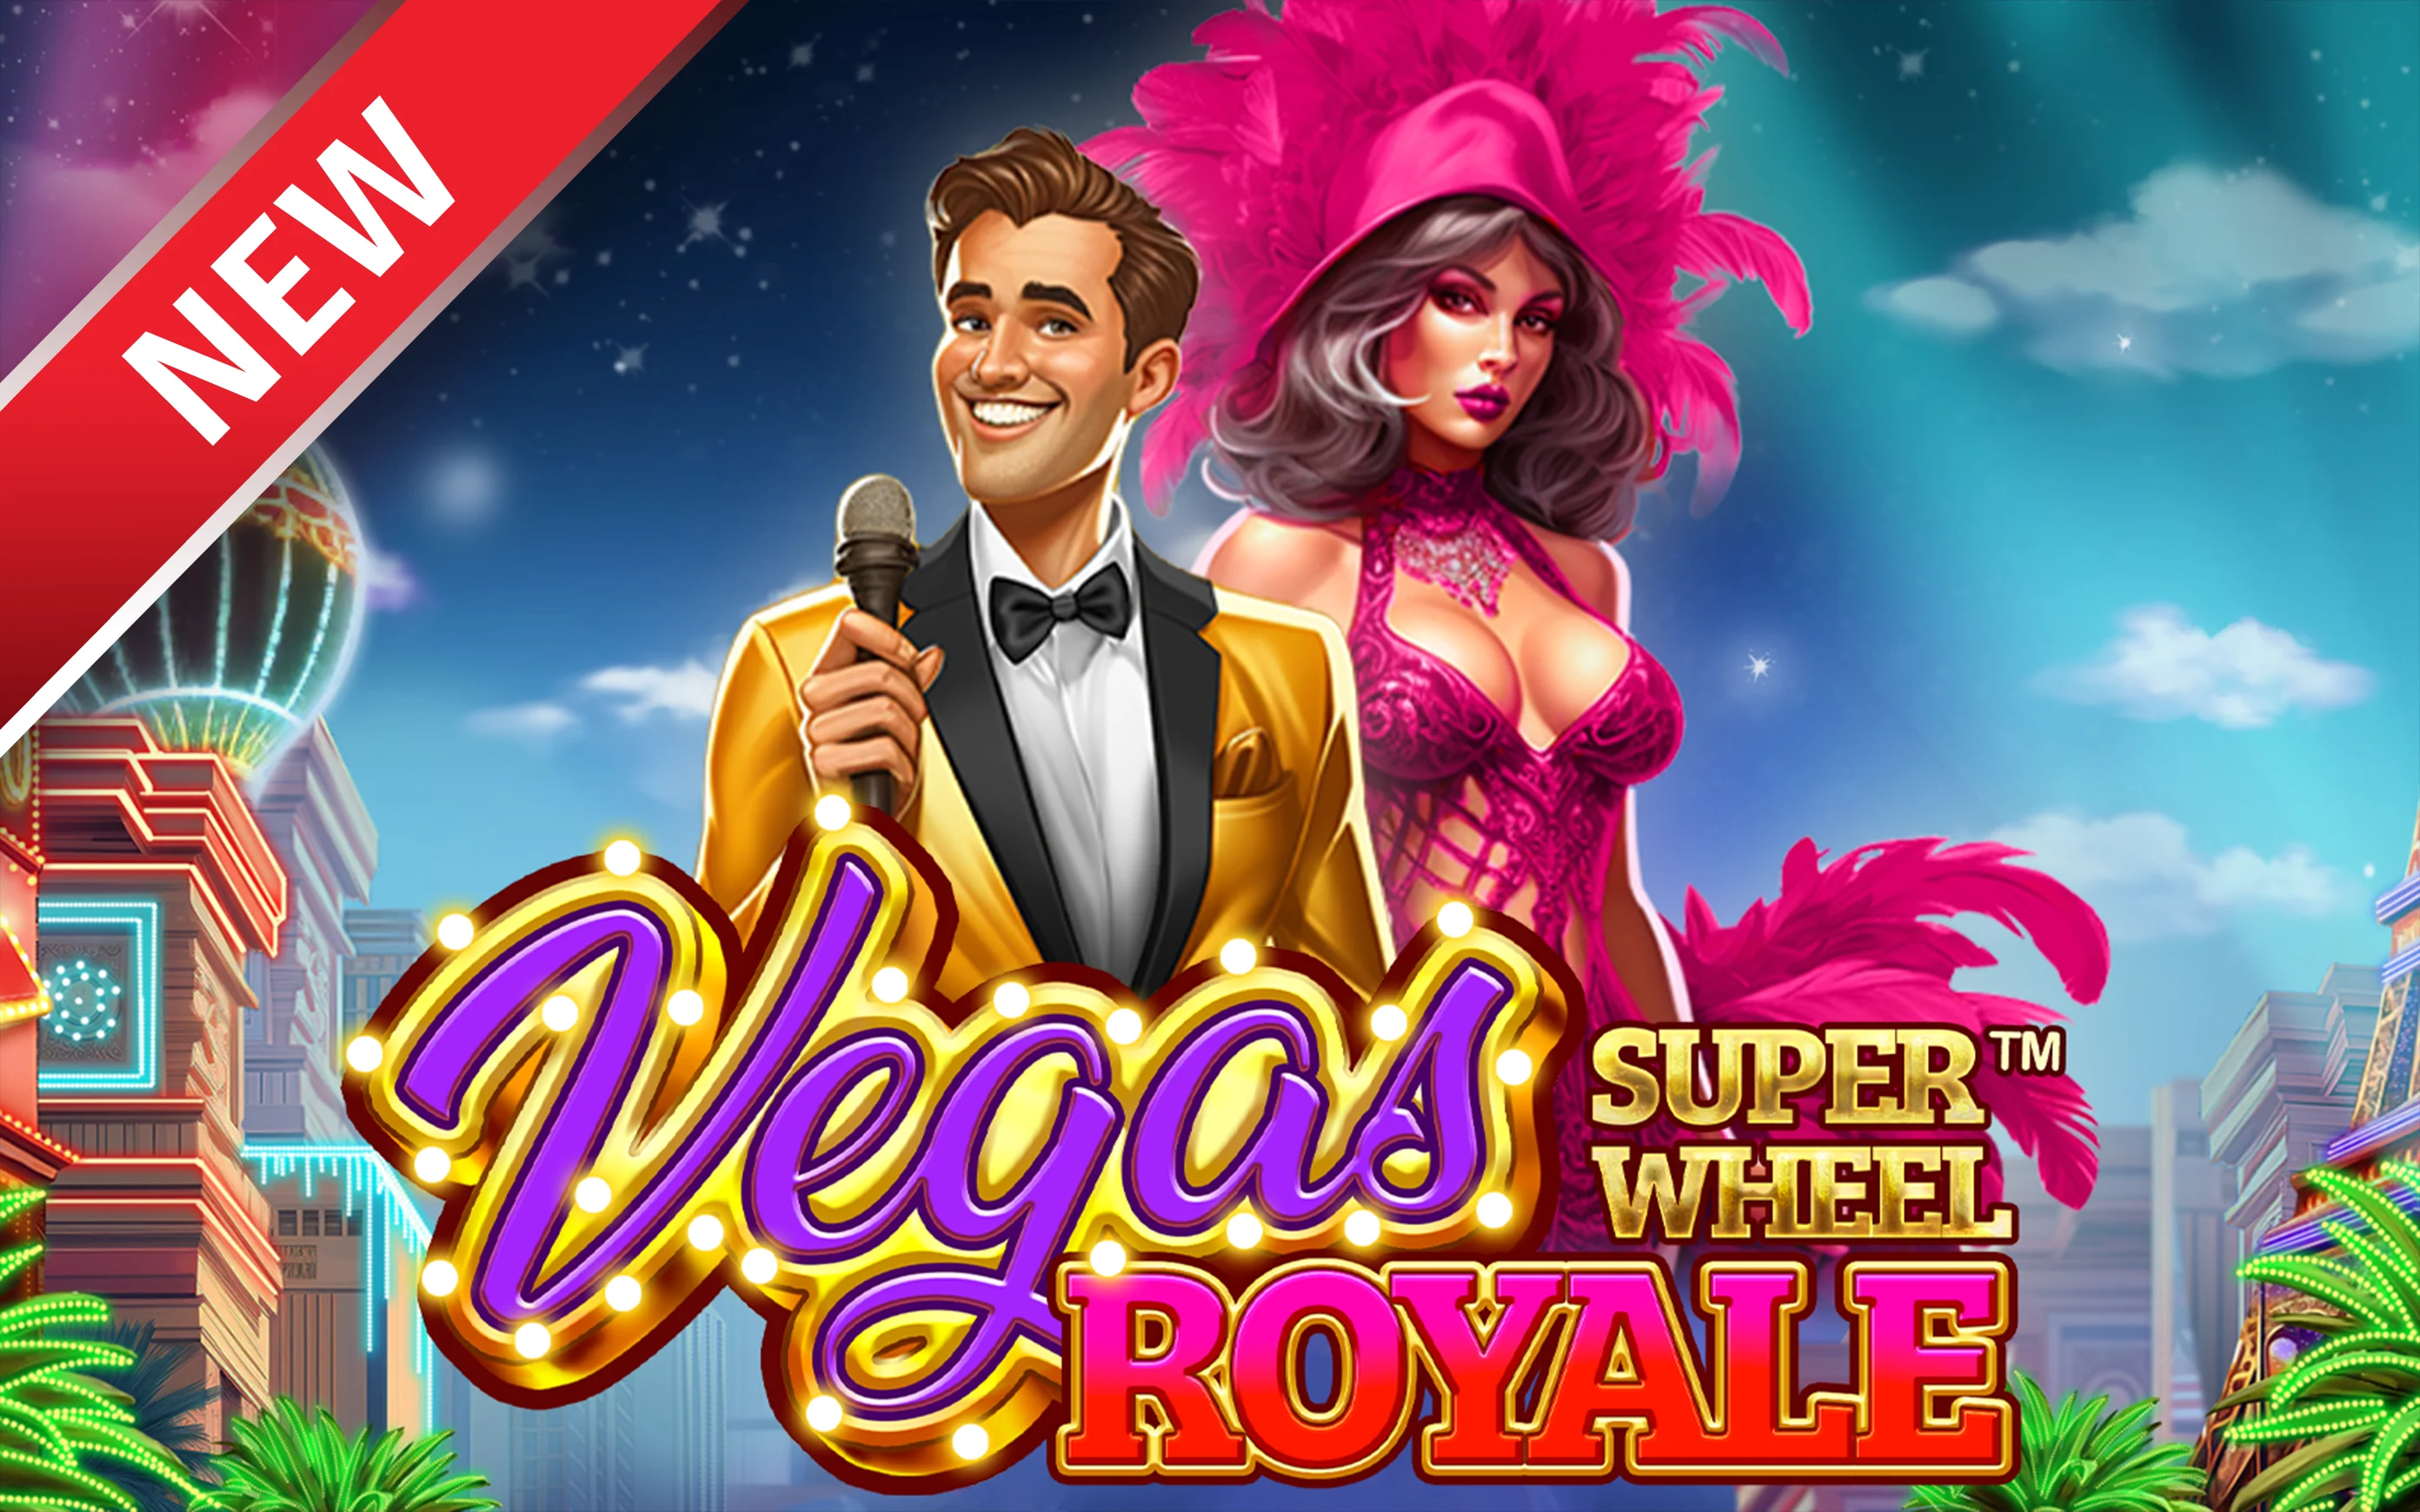 Jogue Vegas Royale Super Wheel™ no casino online Starcasino.be 